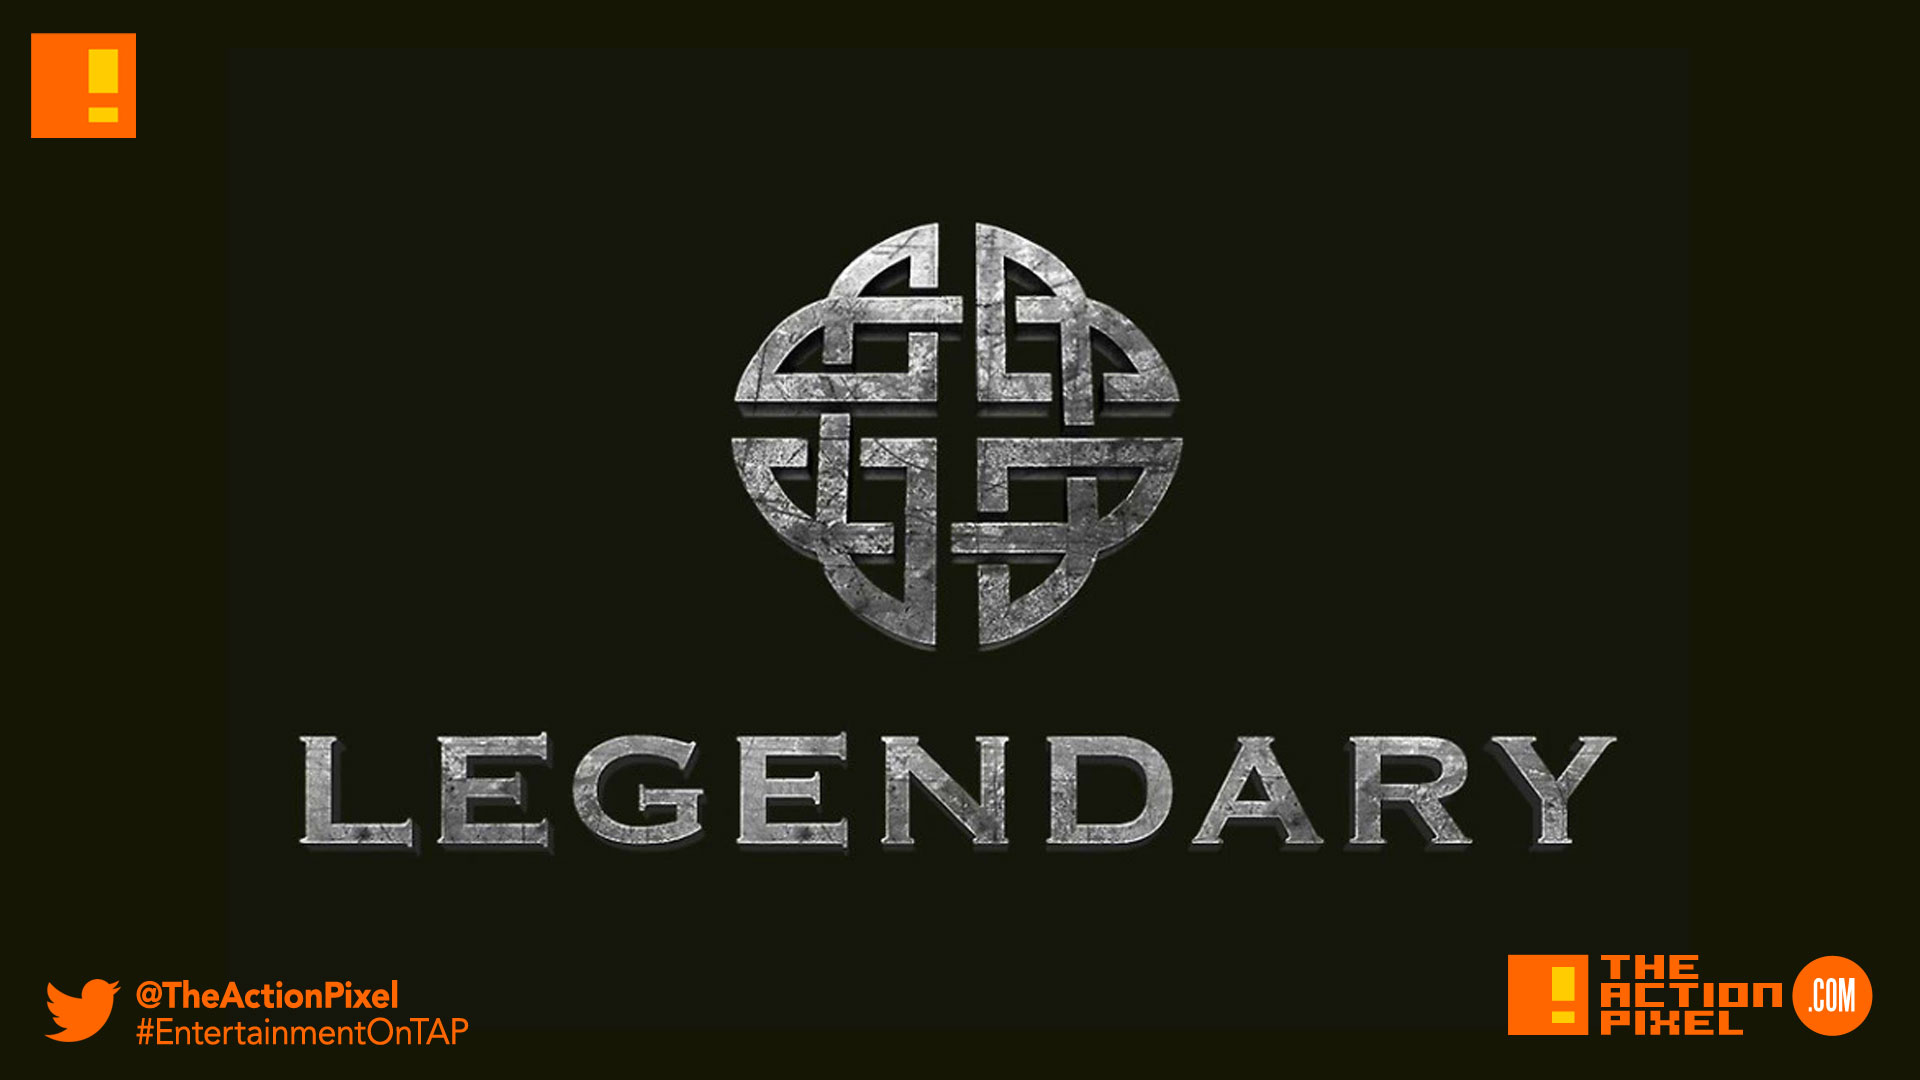 legendary, nonplayer, nate simpson, Legendary Entertainment, entertainment on tap, the action pixel